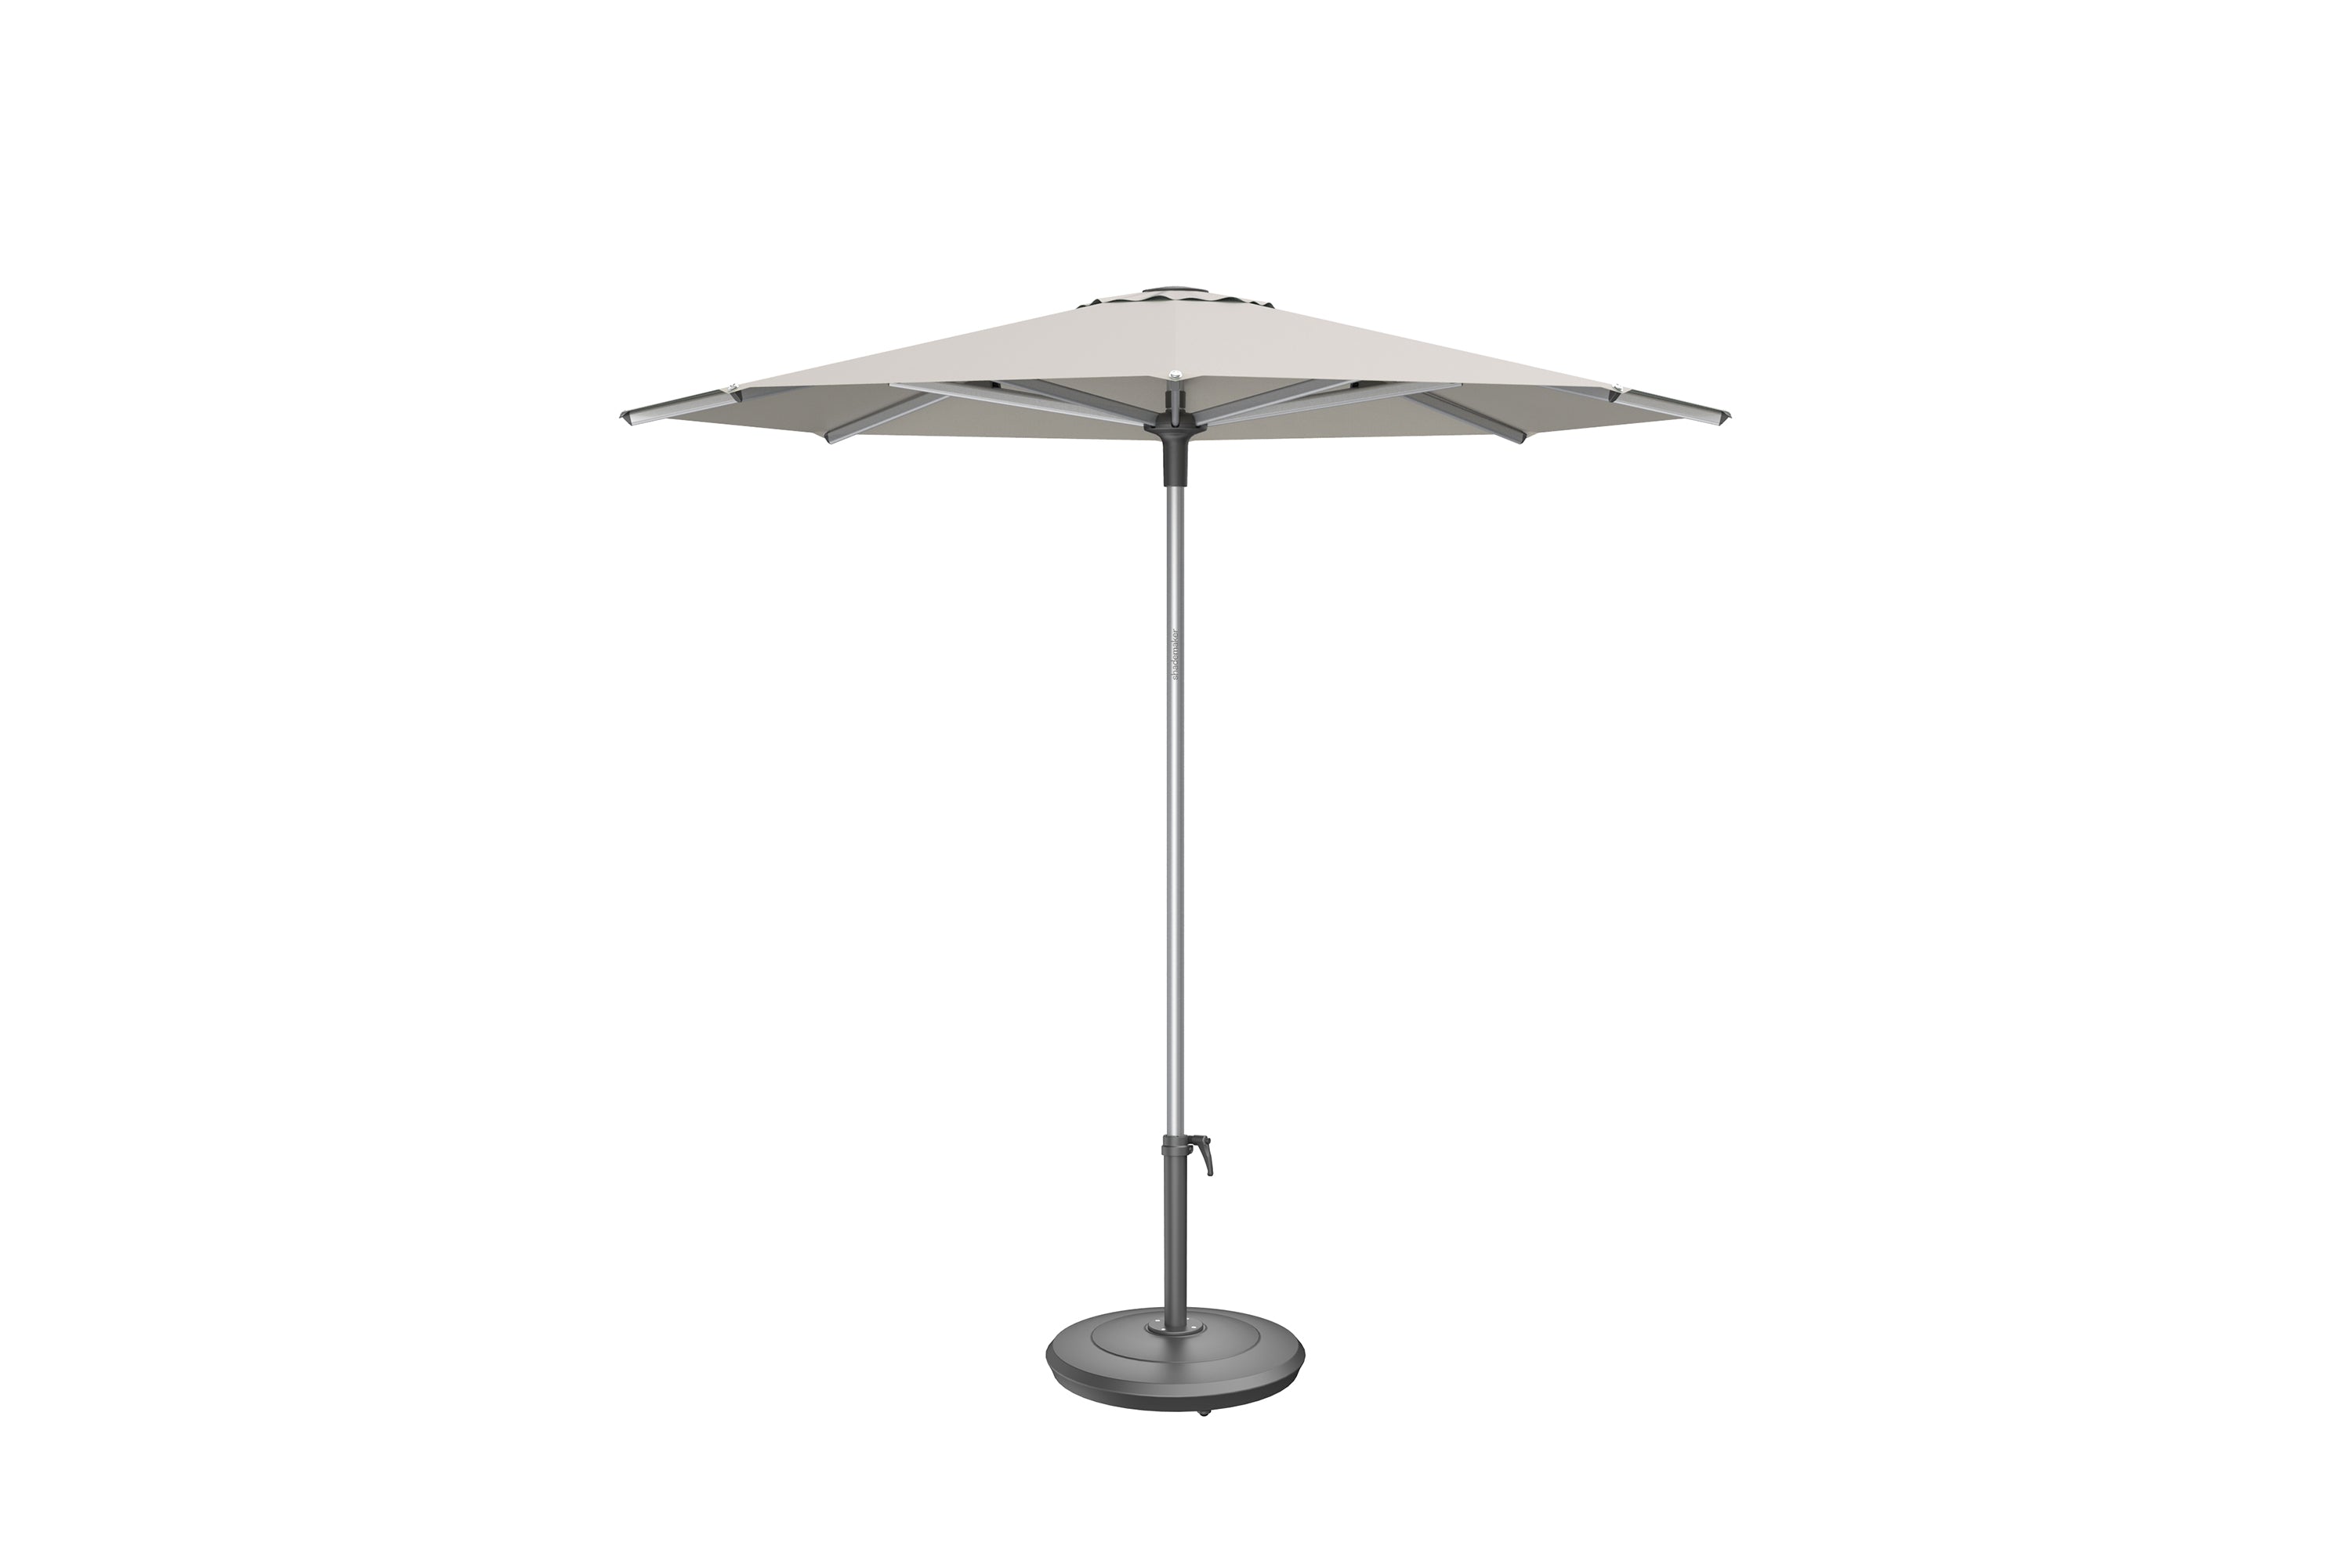 8 ft Octagon Libra Umbrella by Shademaker